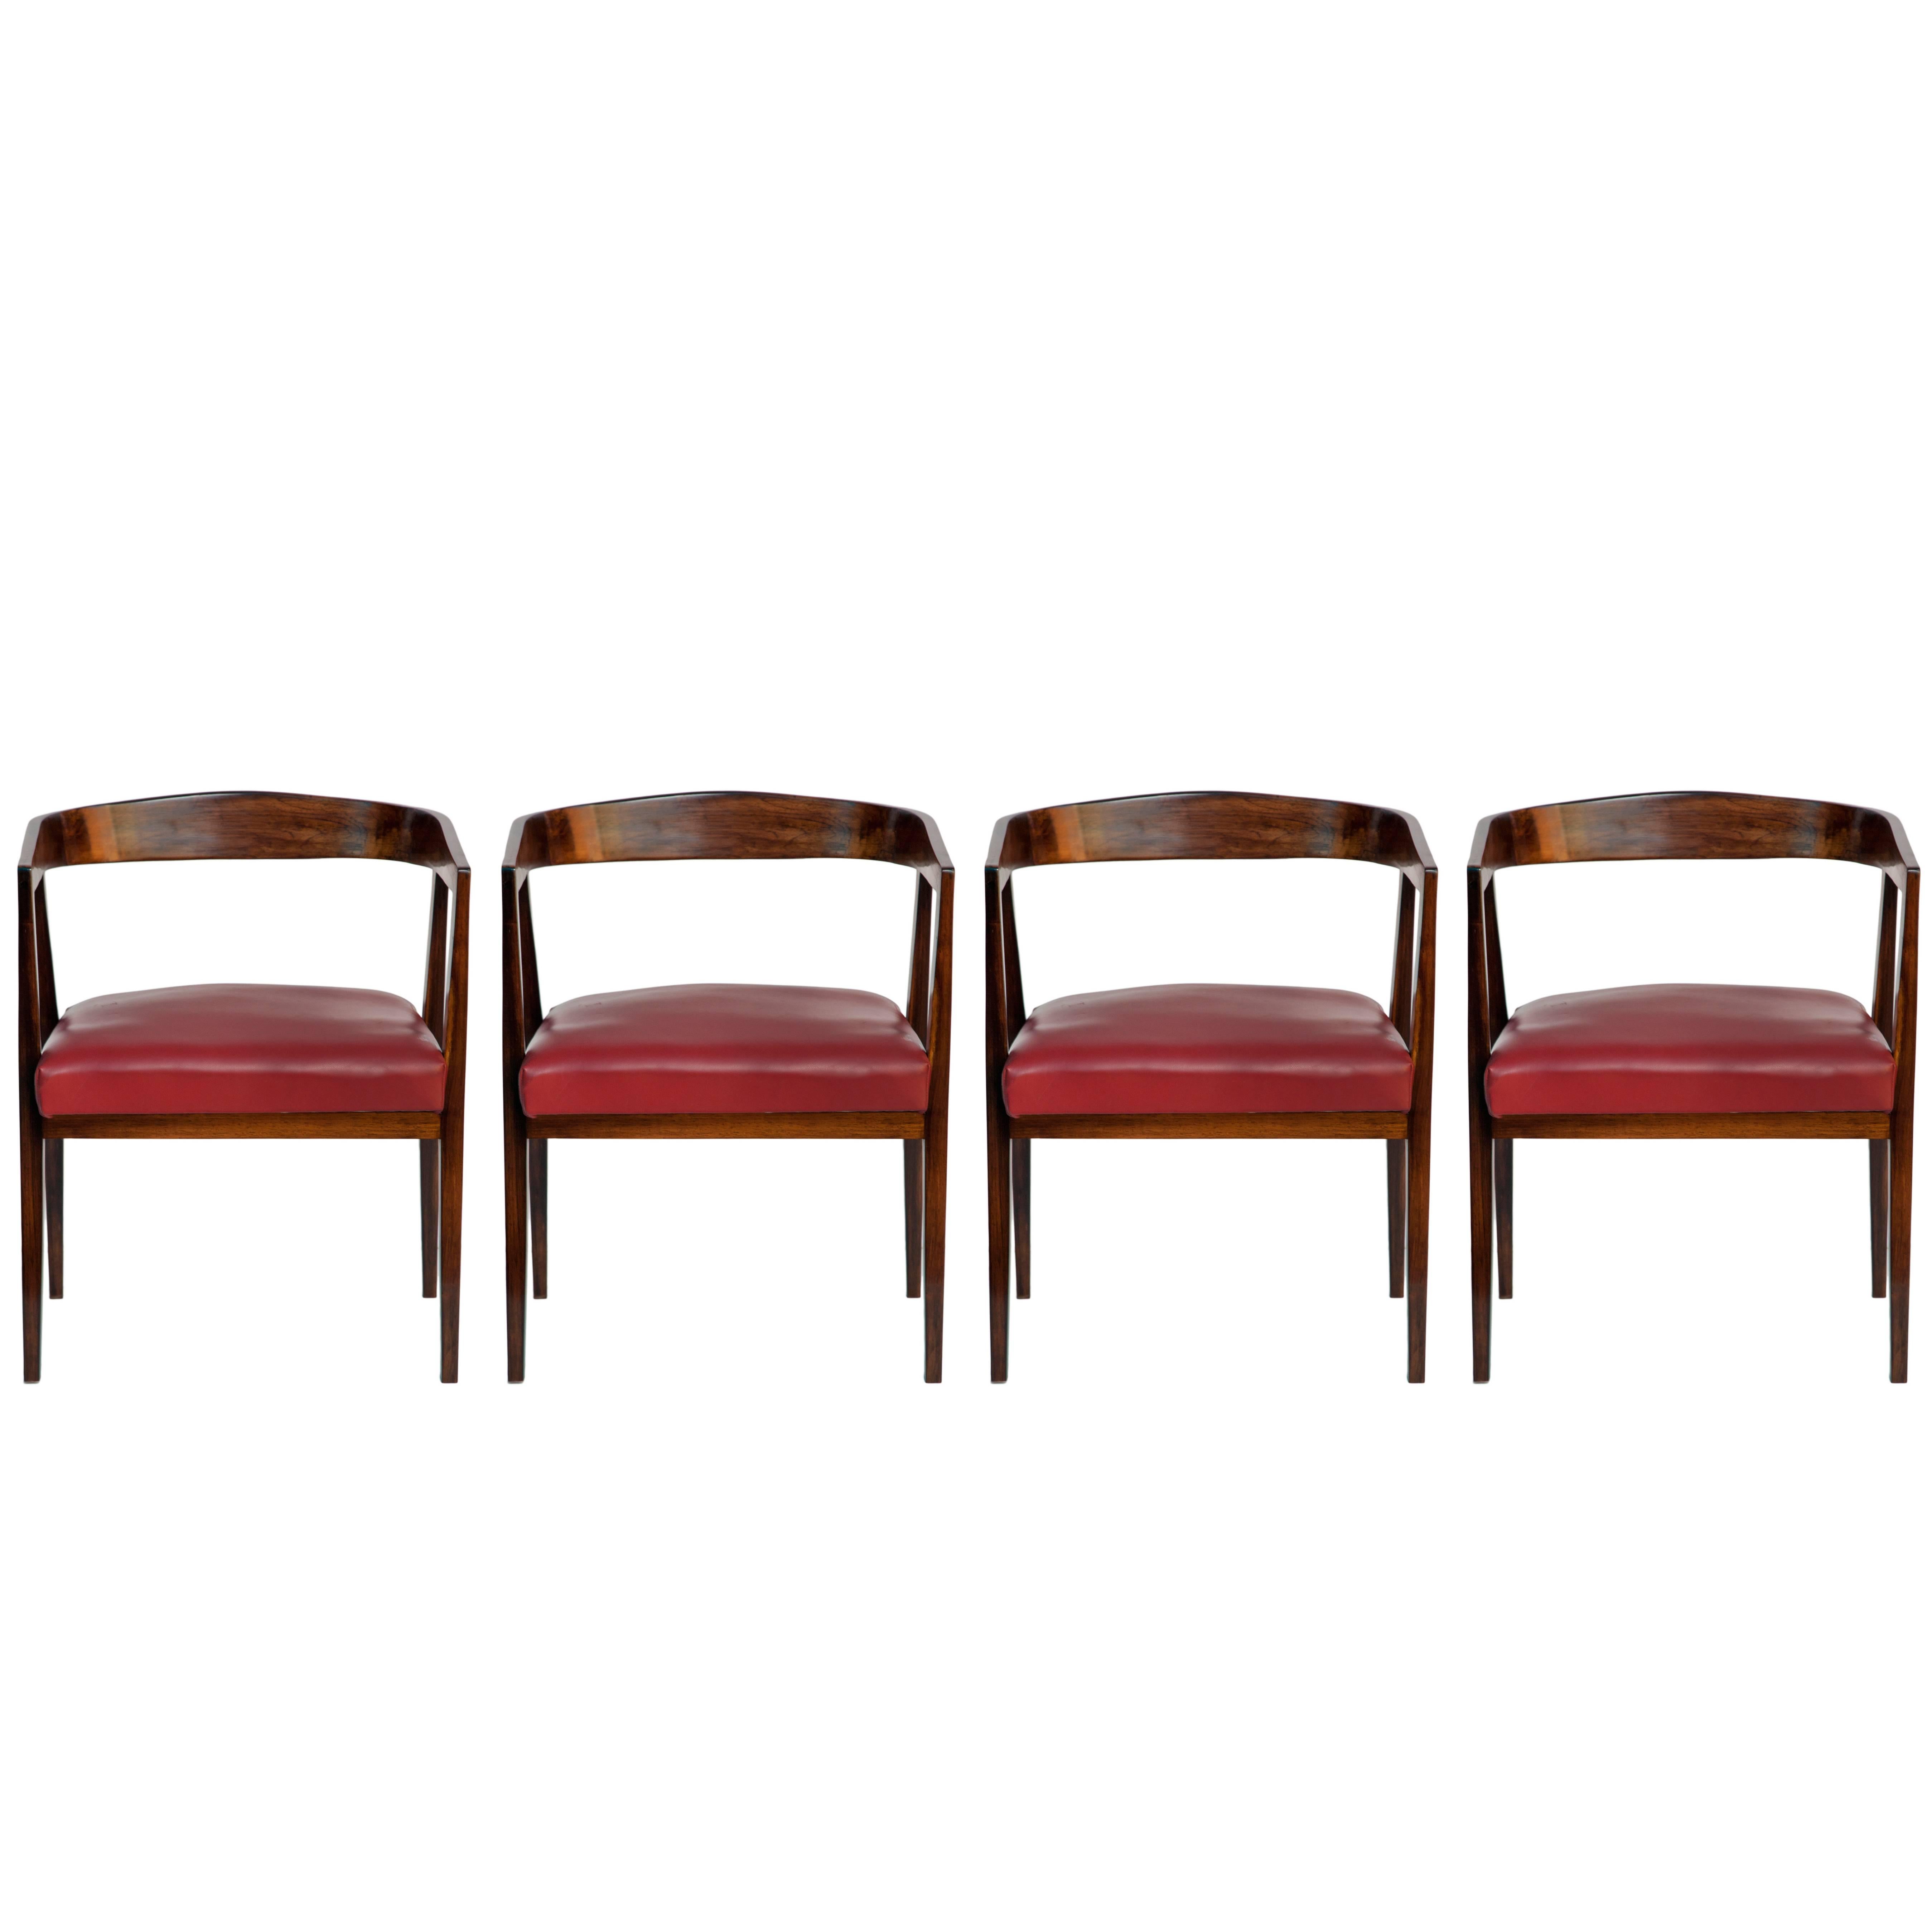 Set of Four Joaquim Tenreiro Dining Chairs in Jacaranda with Leather Seats